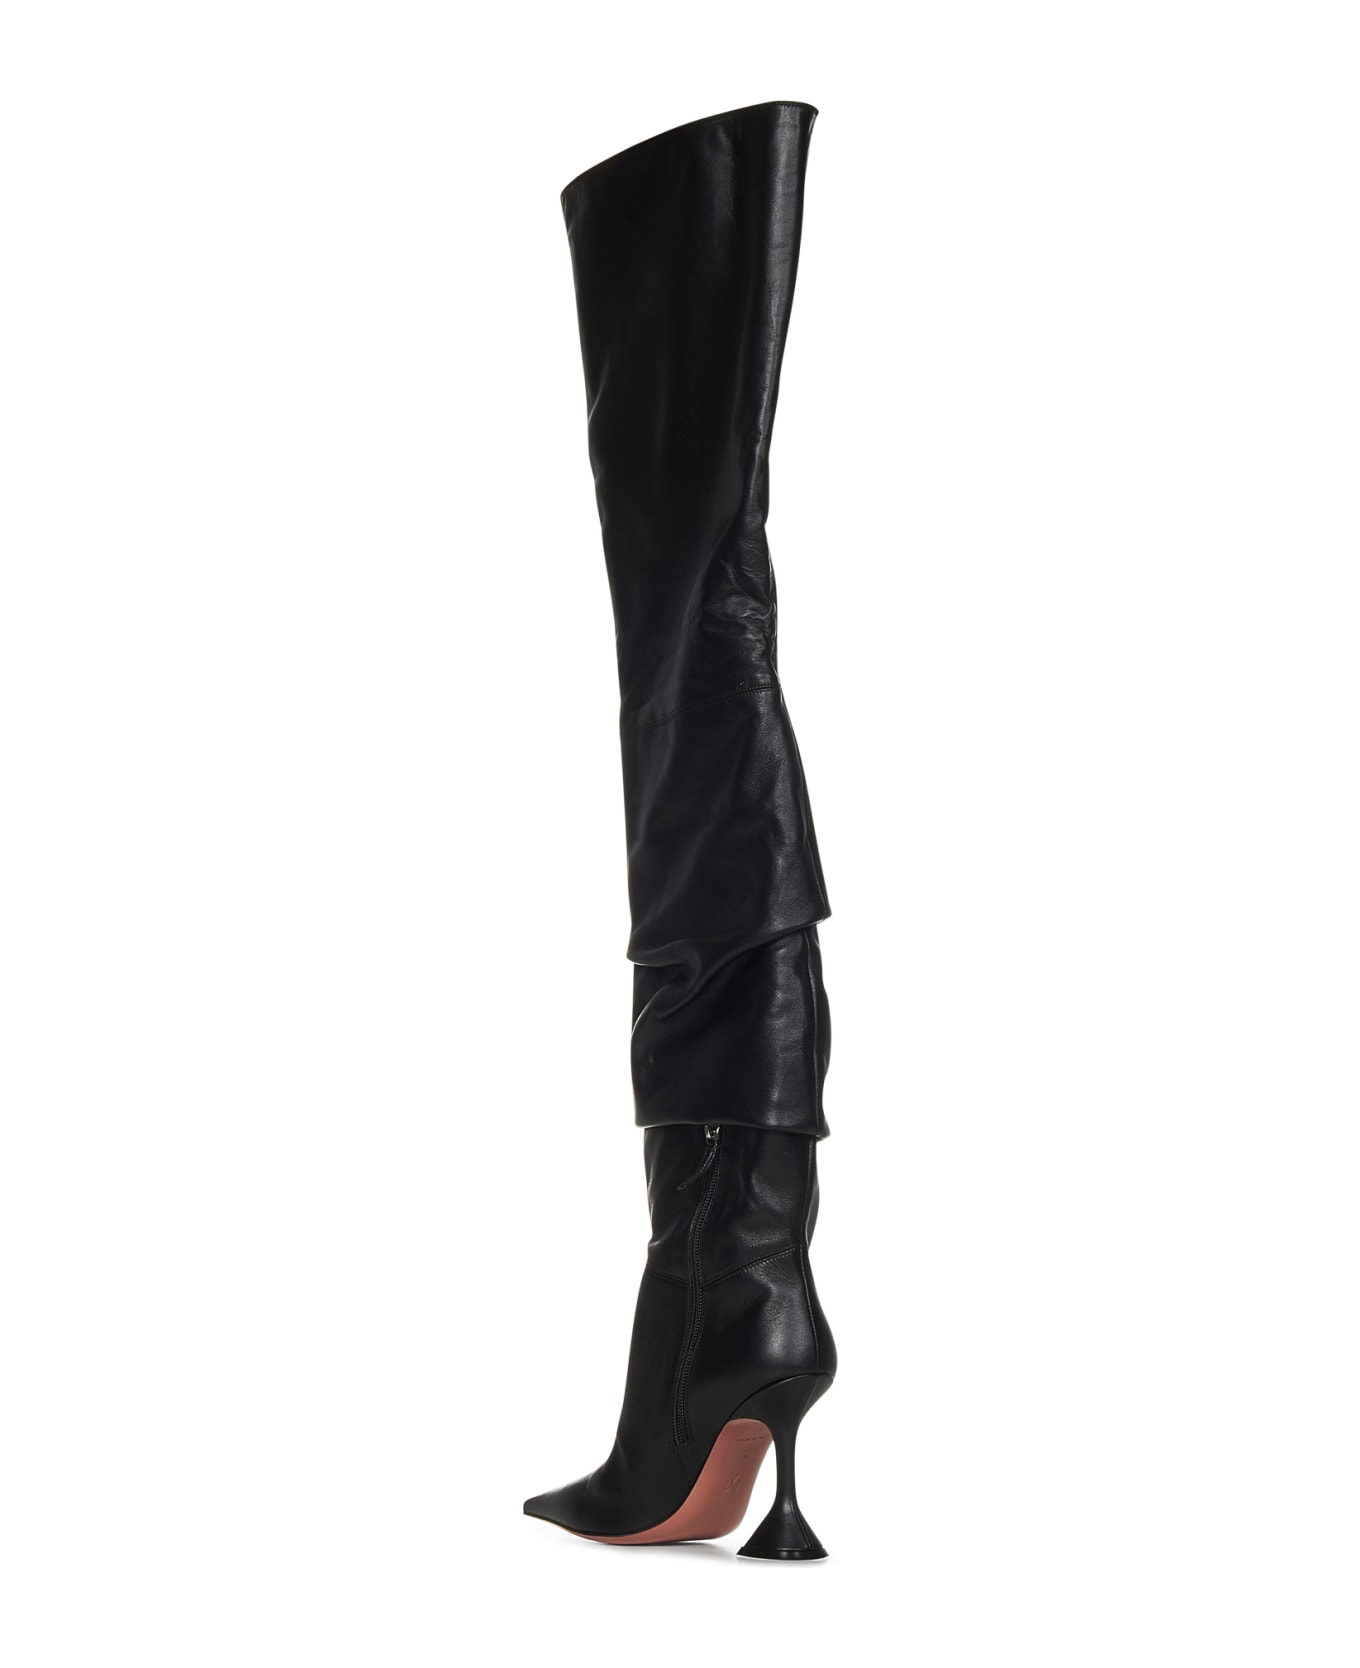 Amina Muaddi Olivia Thigh High Boots - Black ブーツ